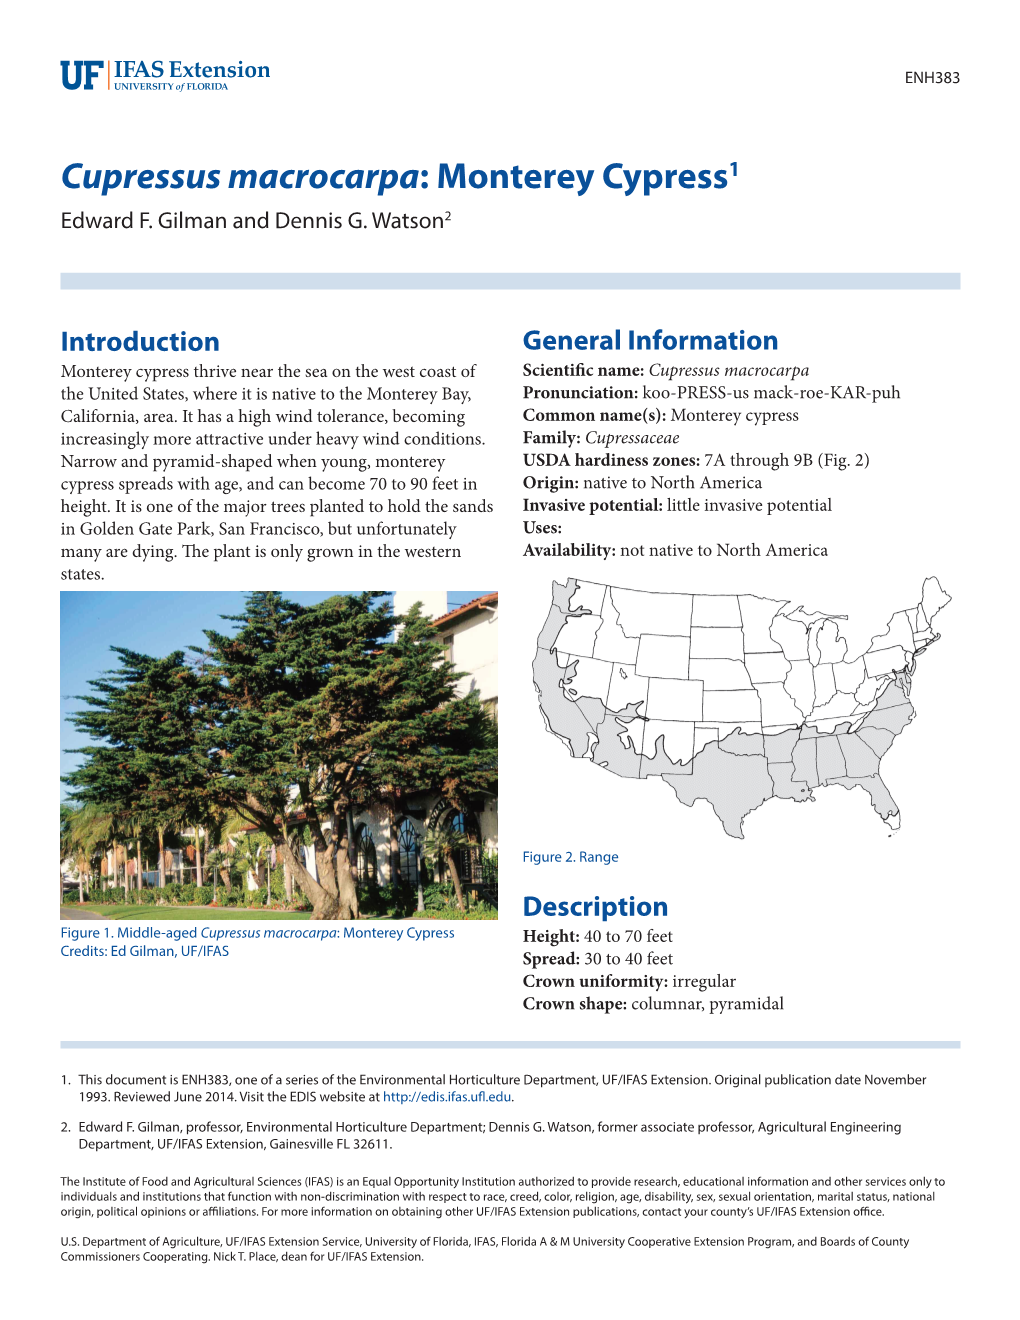 Cupressus Macrocarpa: Monterey Cypress1 Edward F